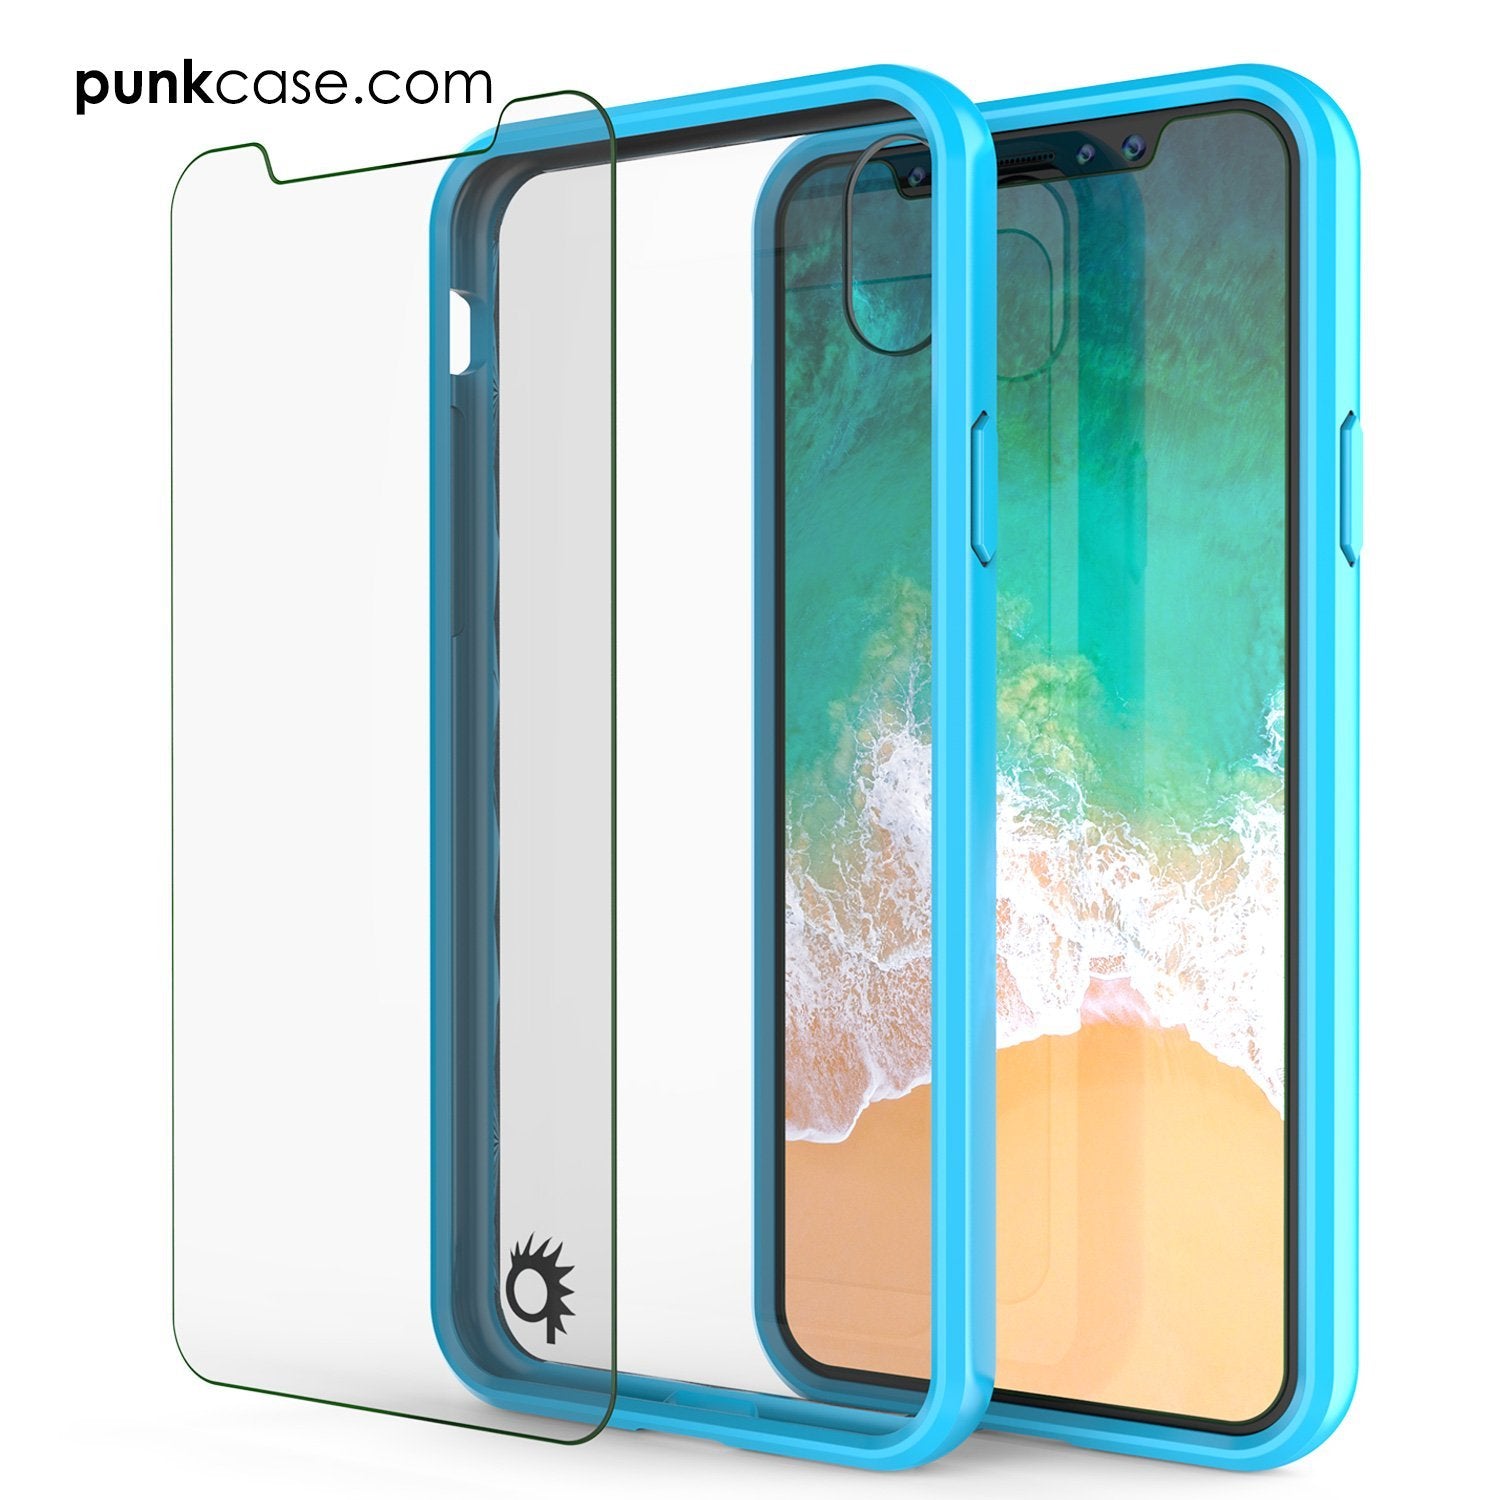 iPhone X Punkcase LUCID 2.0 Series Slim Fit Dual Layer Case Light Blue